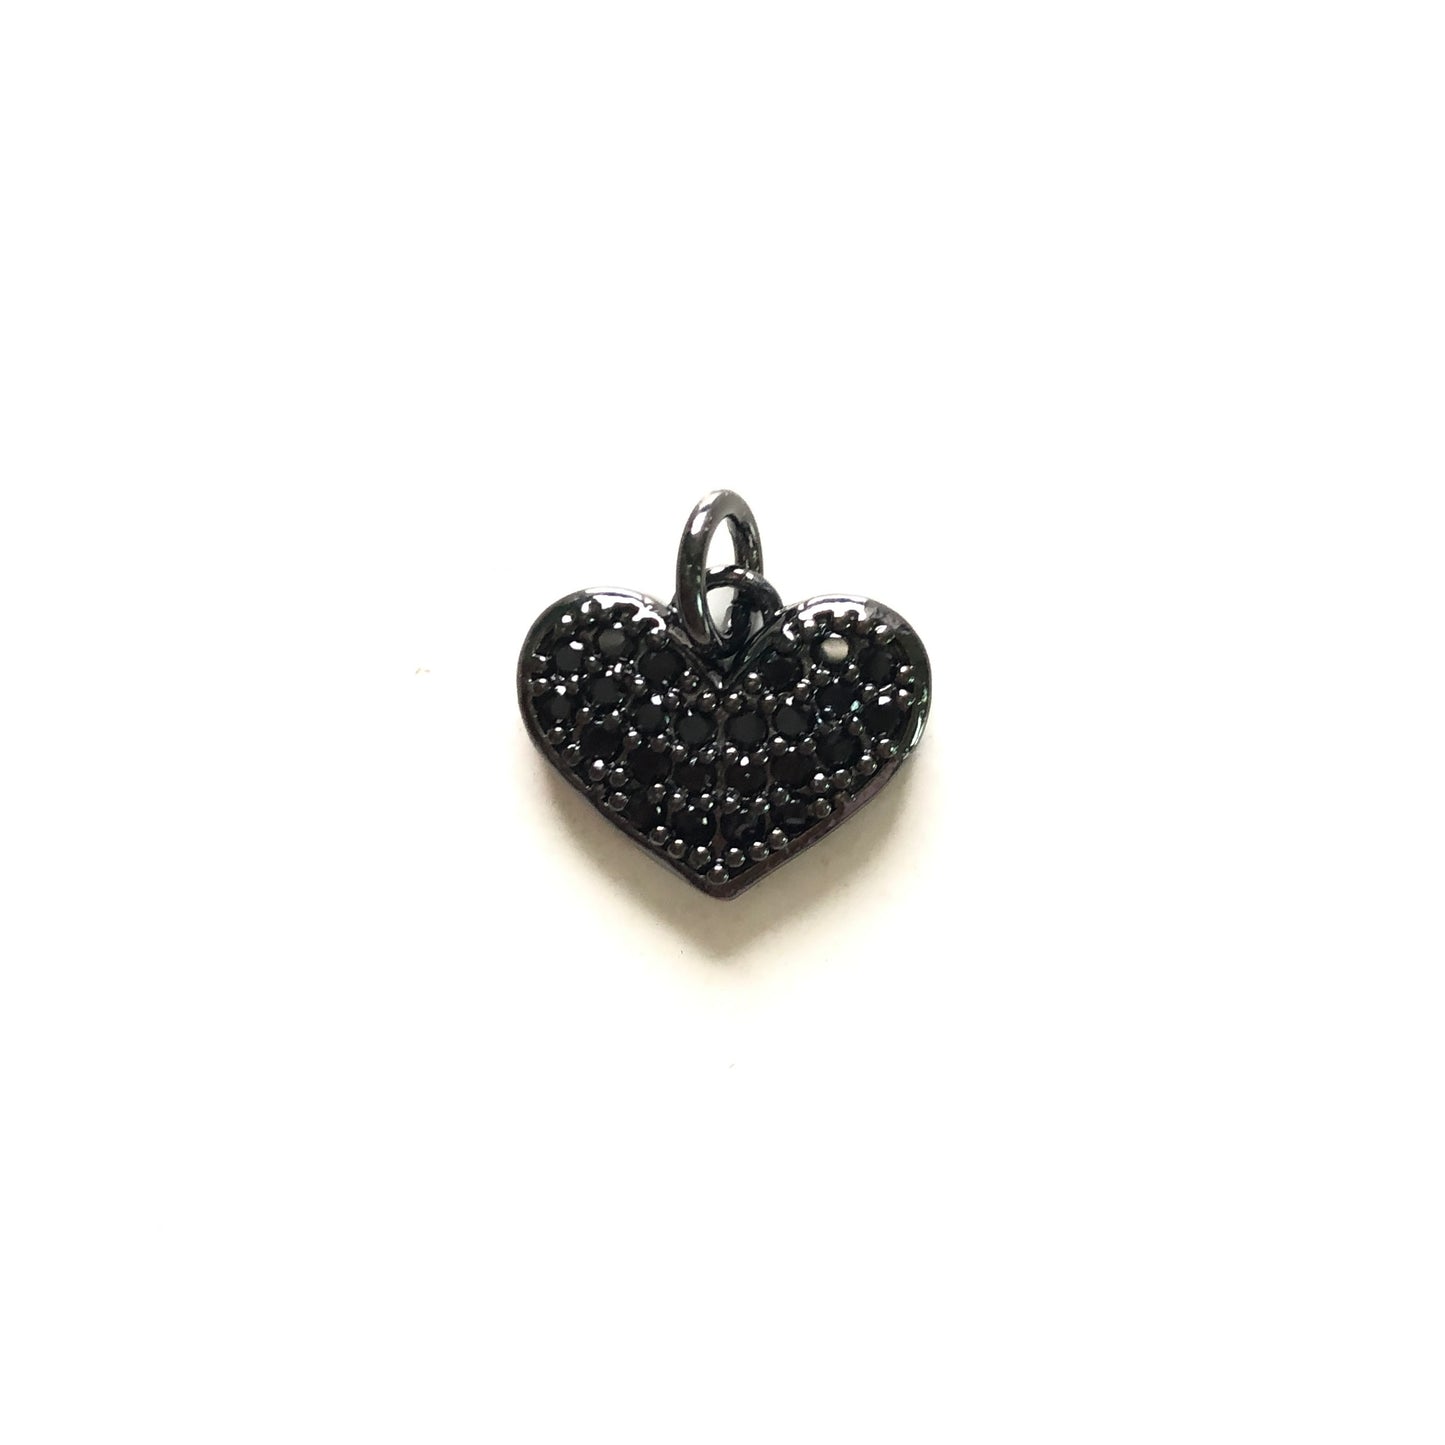 10pcs/lot 15*12mm Small Size CZ Paved Heart Charms Black on Black CZ Paved Charms Hearts Small Sizes Charms Beads Beyond